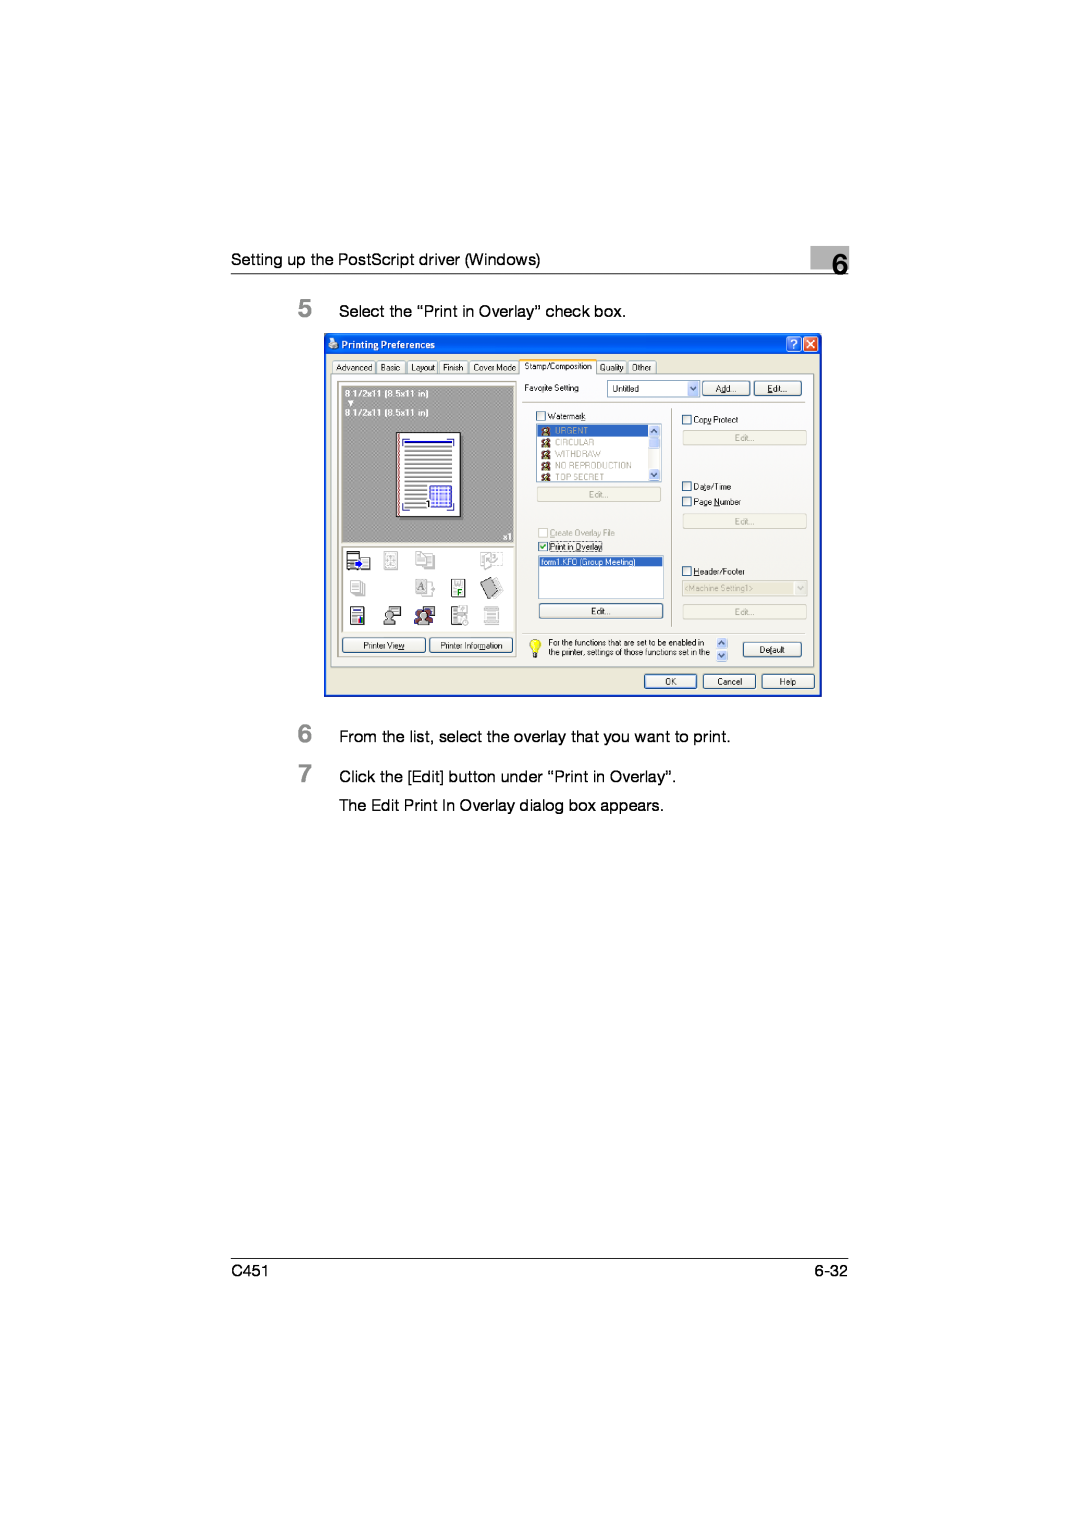 Konica Minolta C451 manual Setting up the PostScript driver Windows, Select the “Print in Overlay” check box, 6-32 